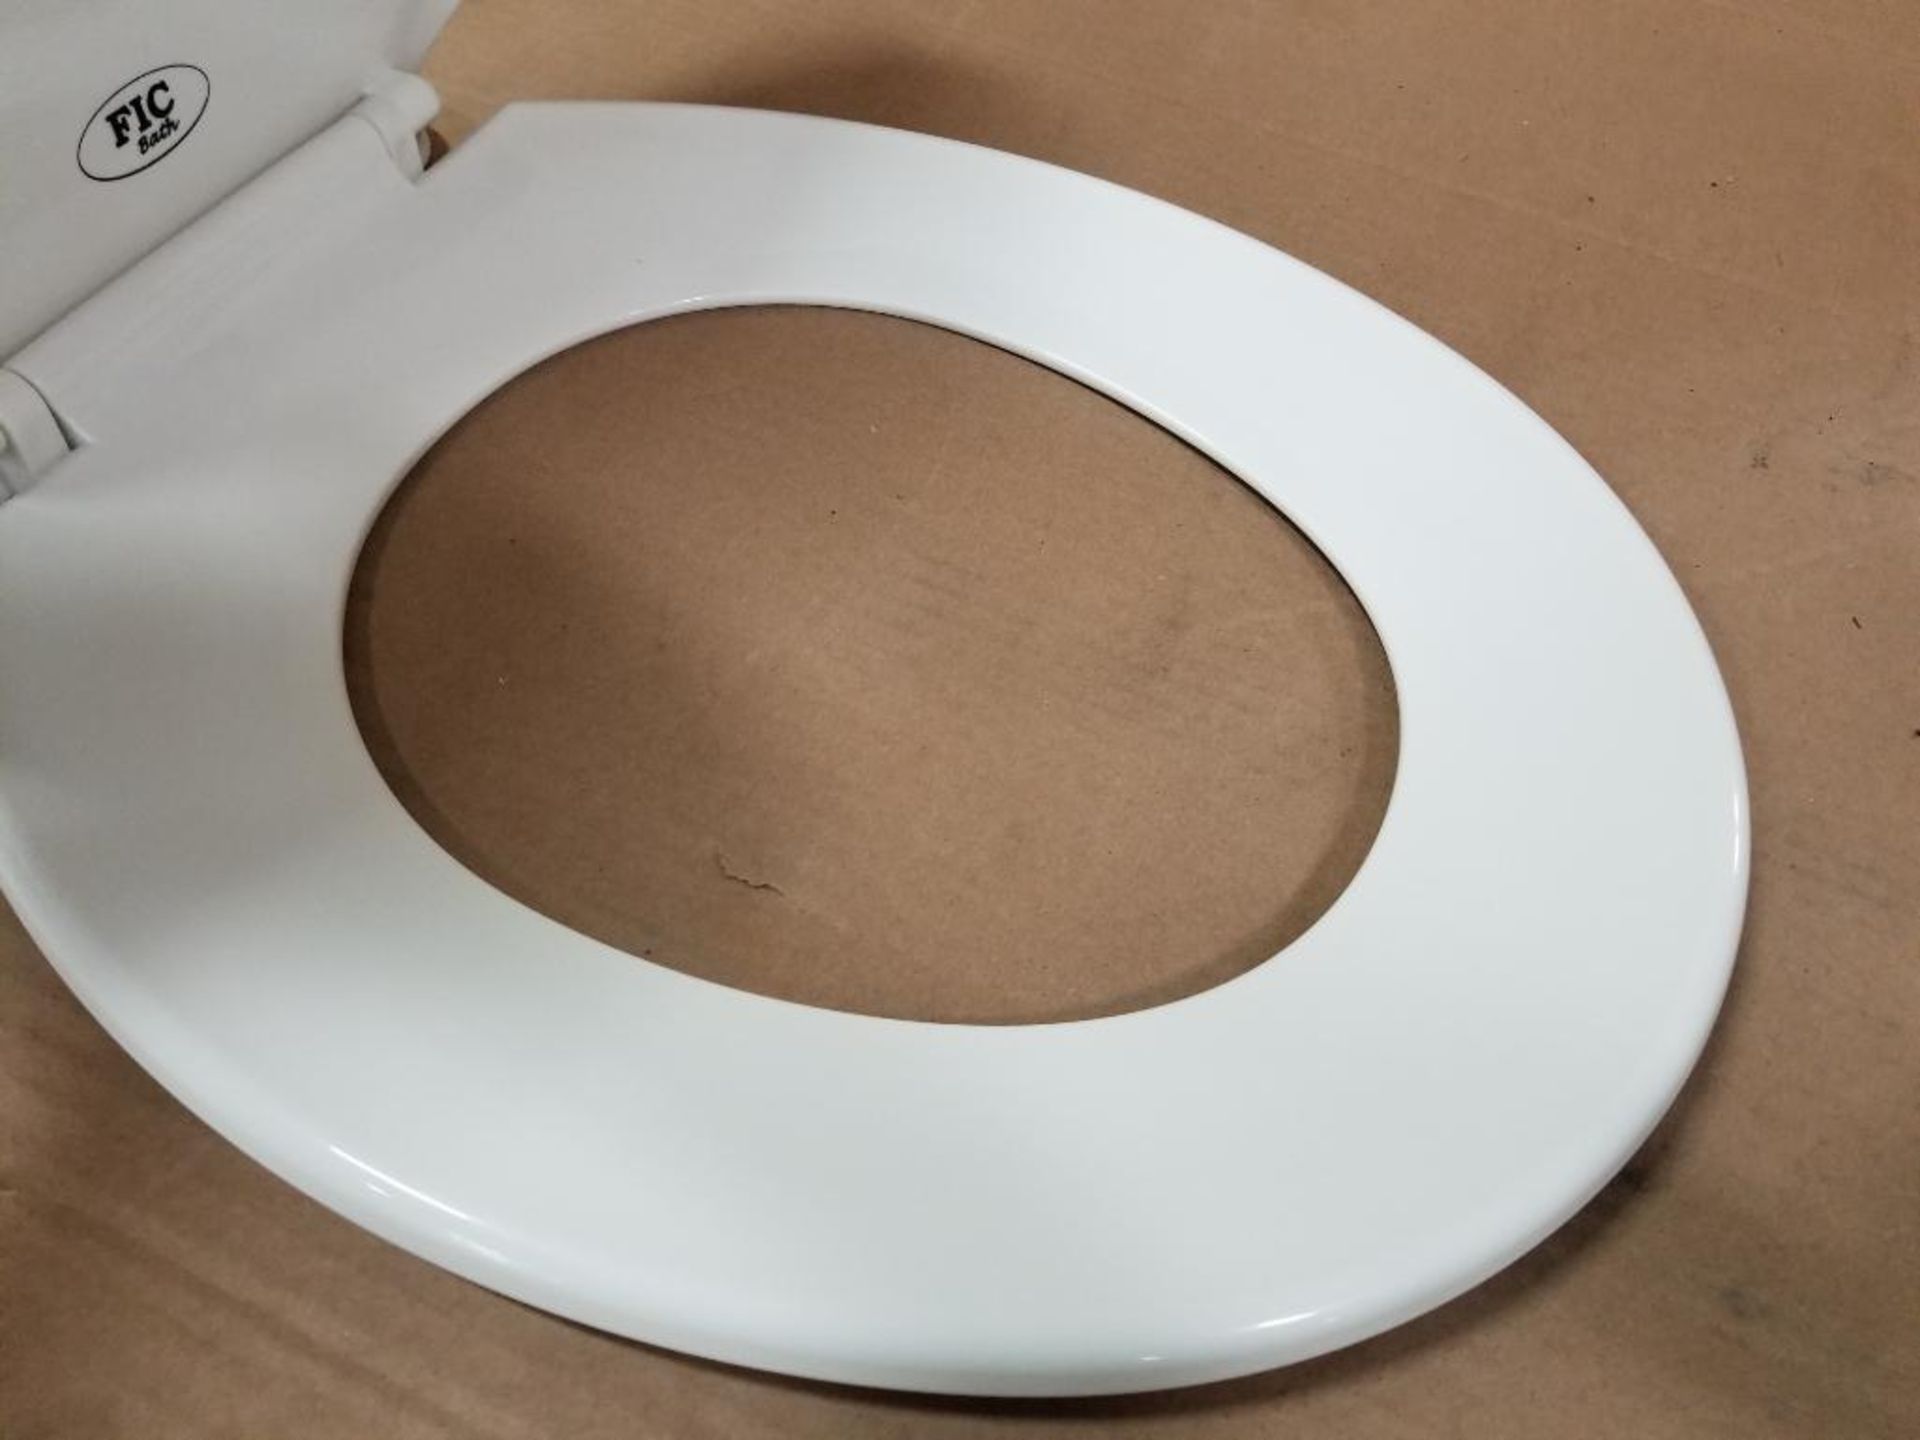 Qty 48 - FIC Bath toilet seat. - Image 3 of 5